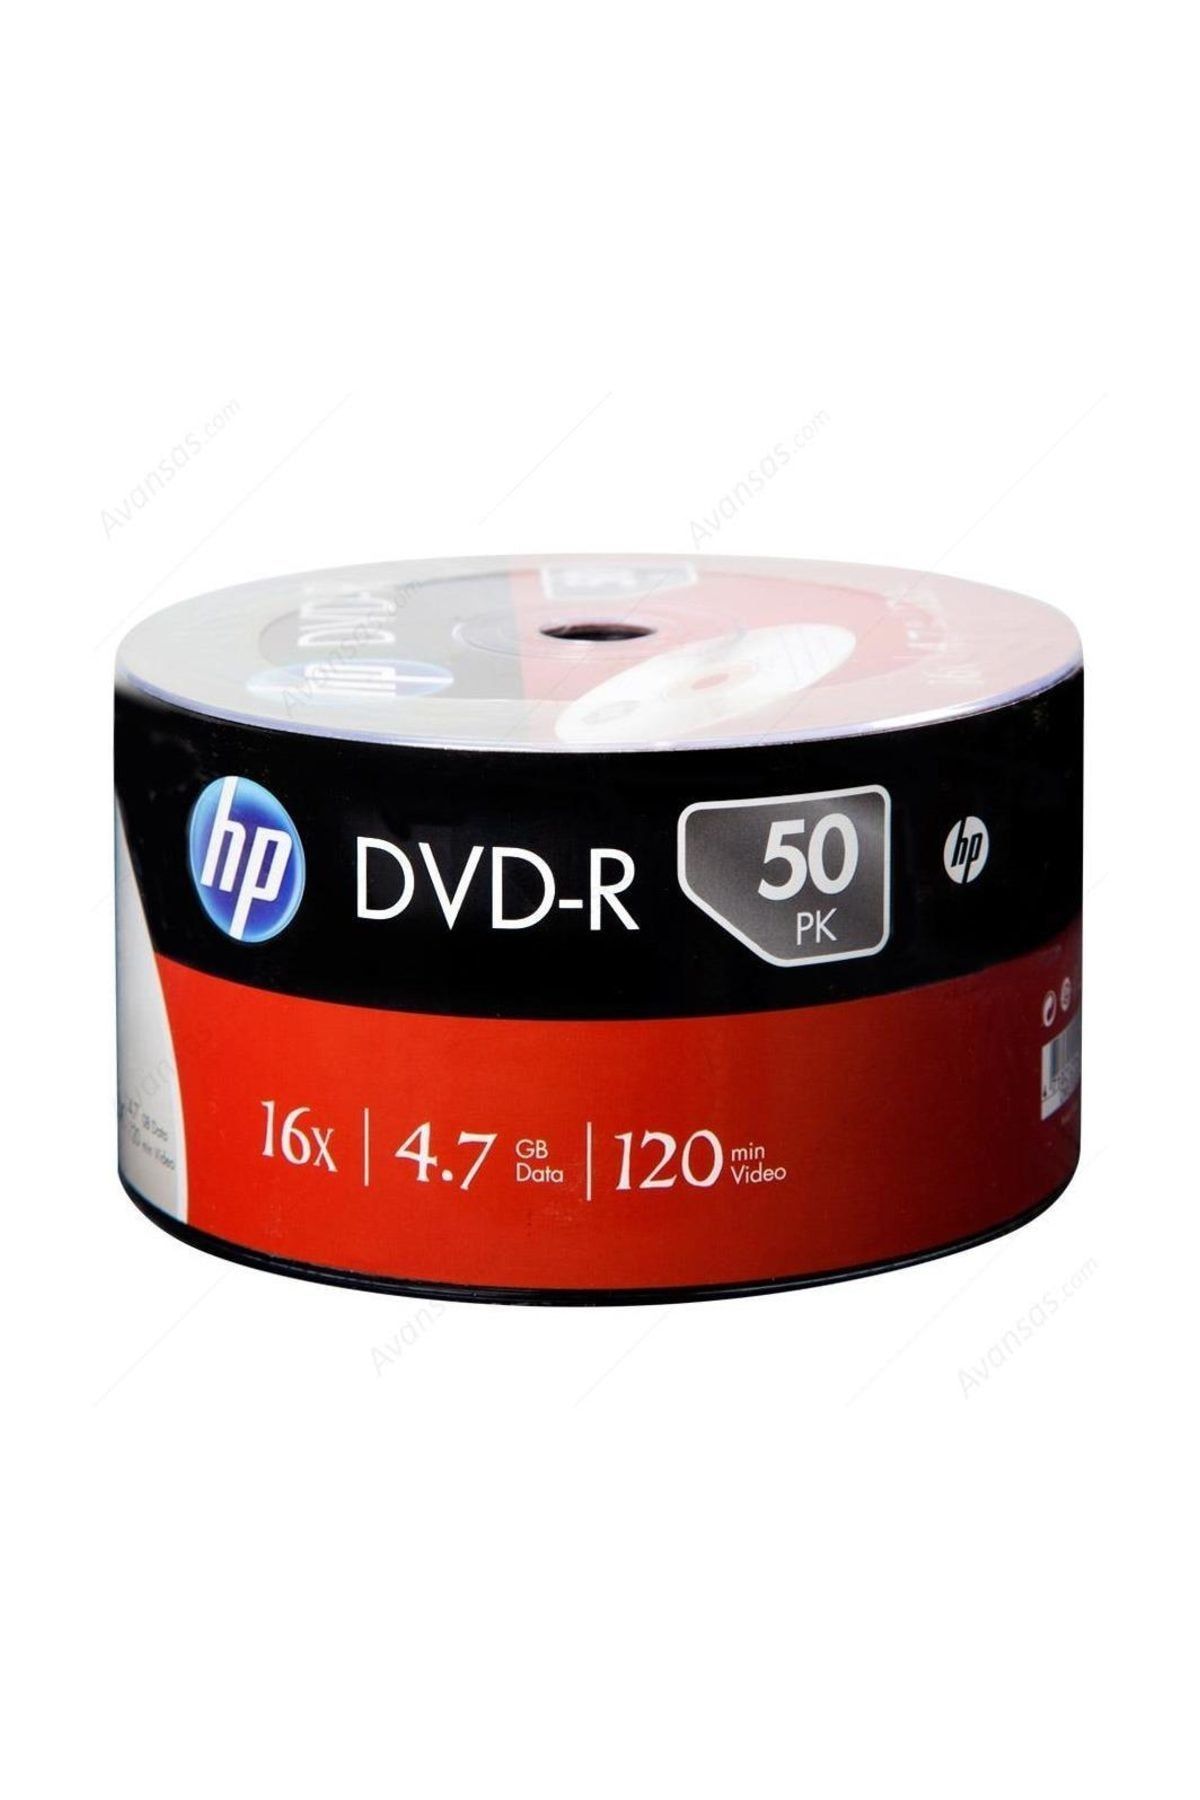 HP DVD-R 16X 50li Spindle 4.7GB 120dk (DME00070-3)